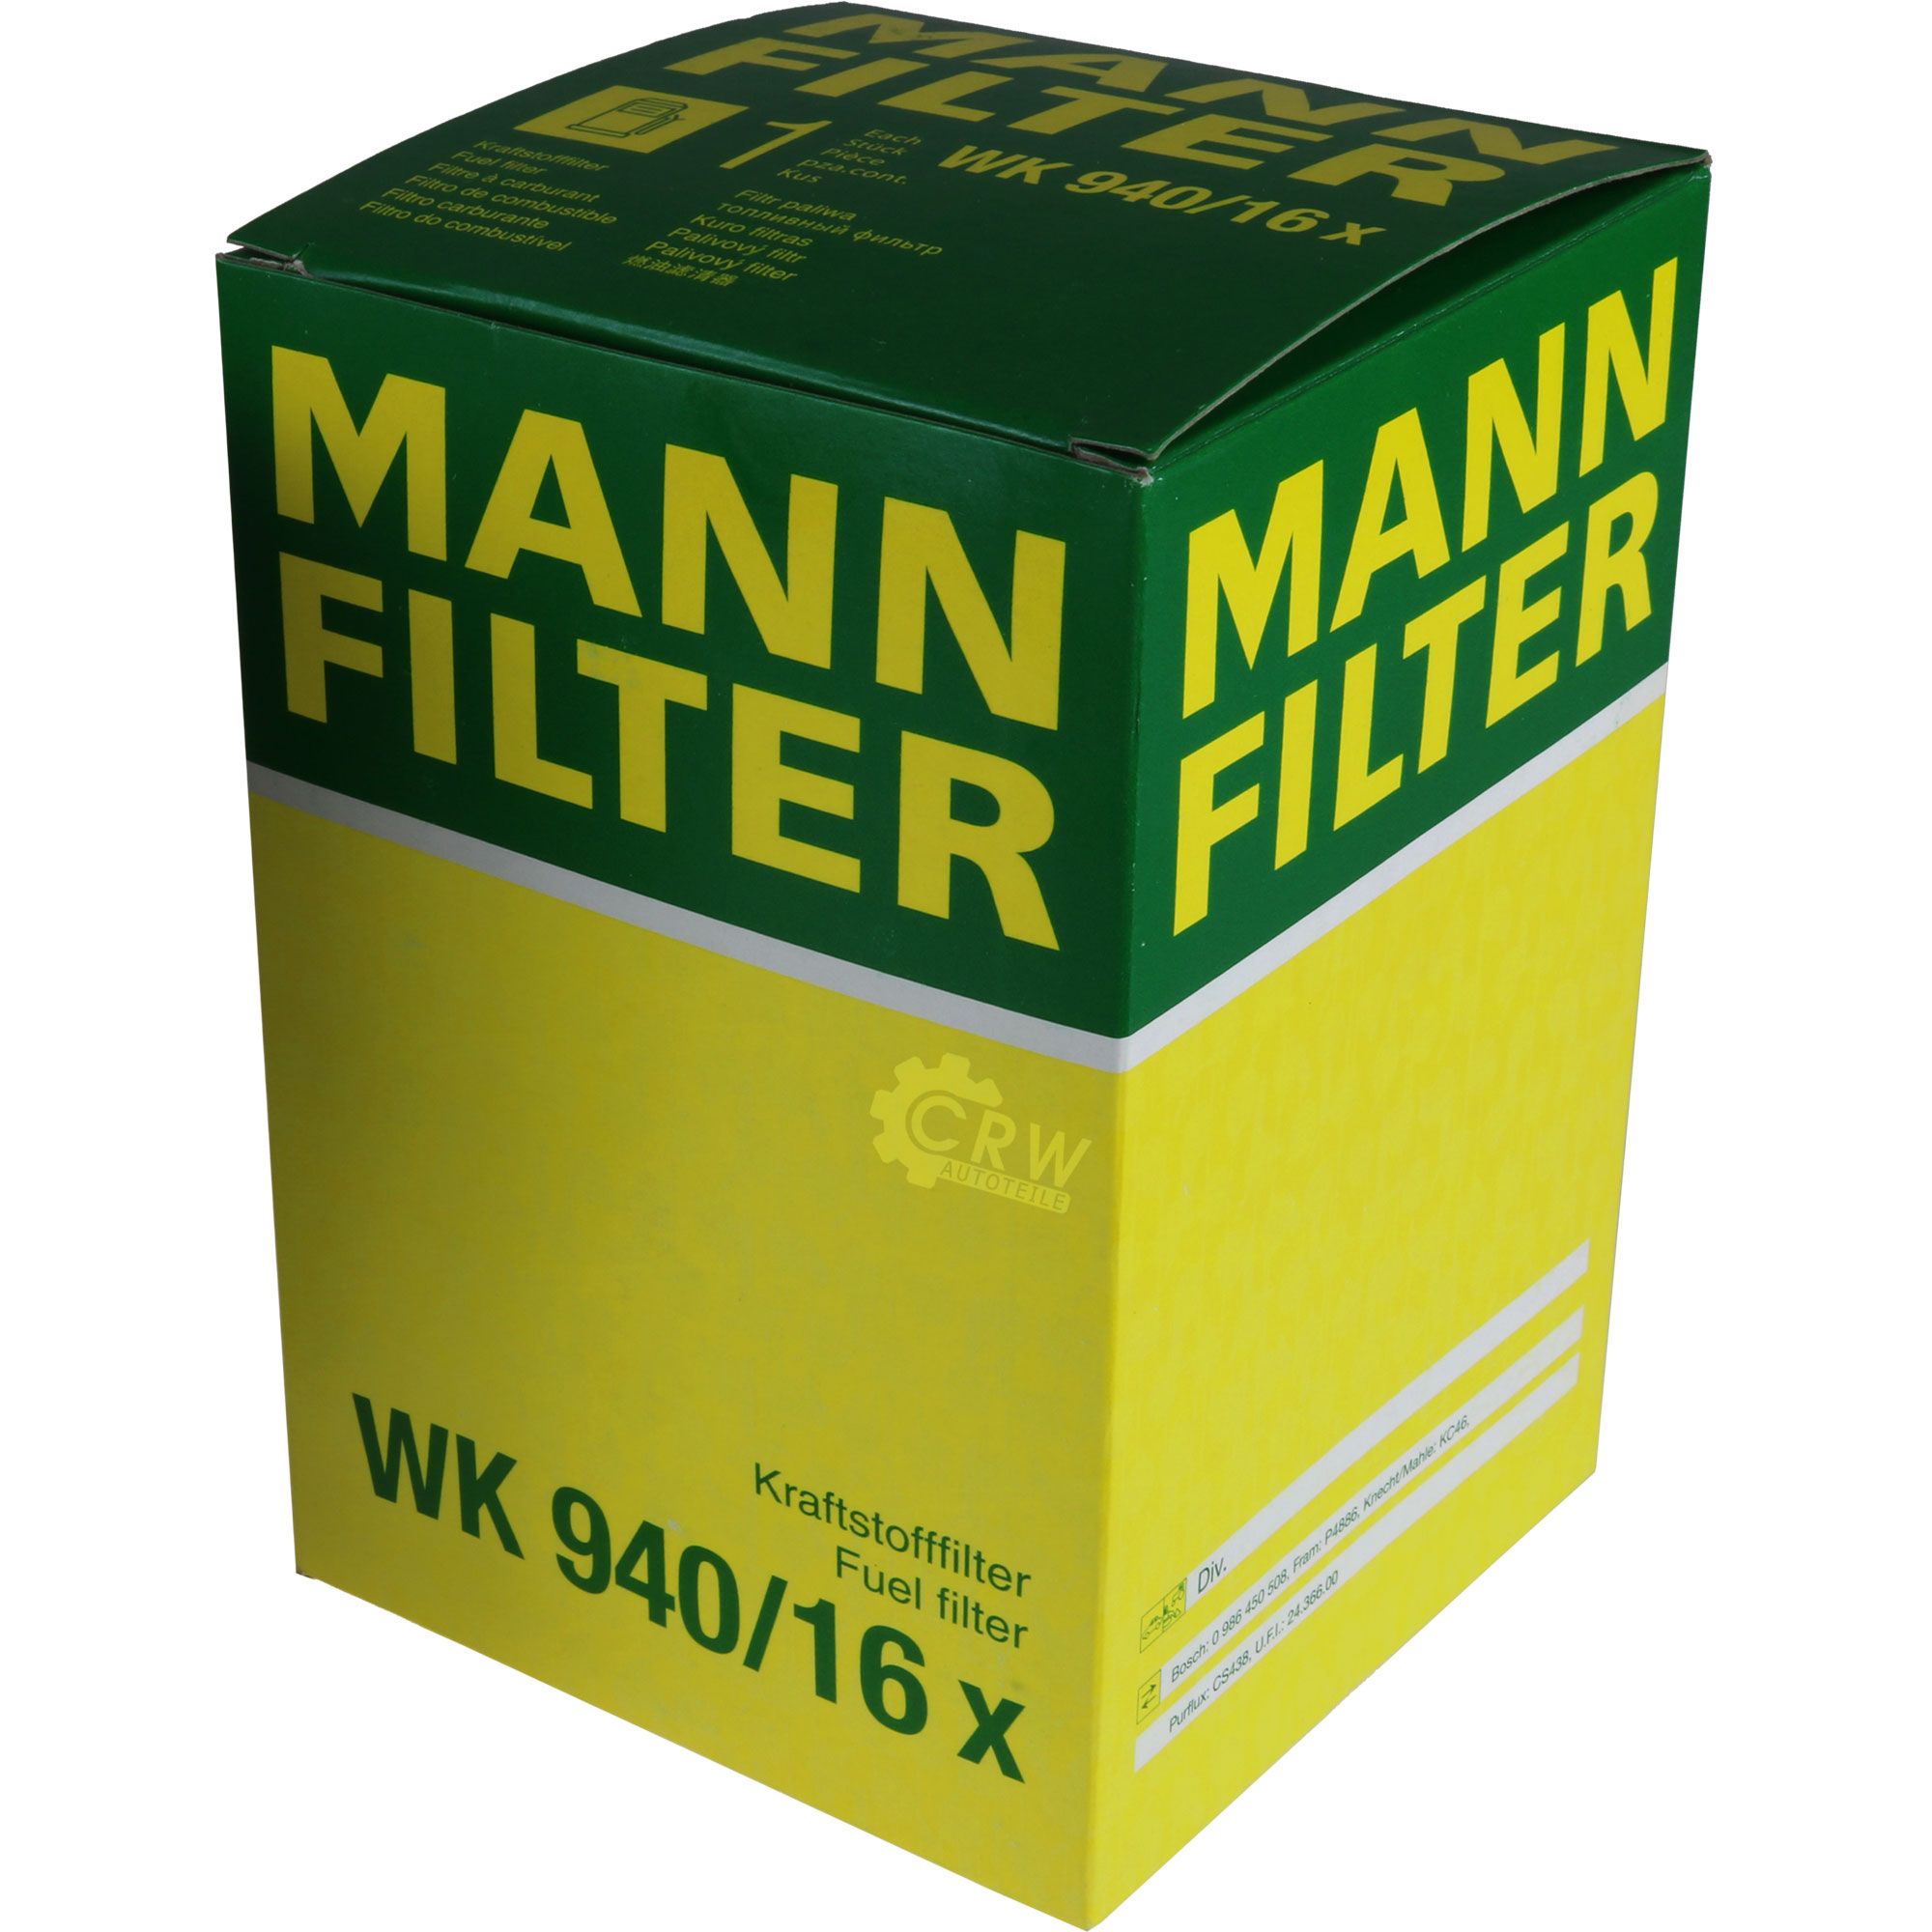 MANN-FILTER Kraftstofffilter WK 940/16 x Fuel Filter